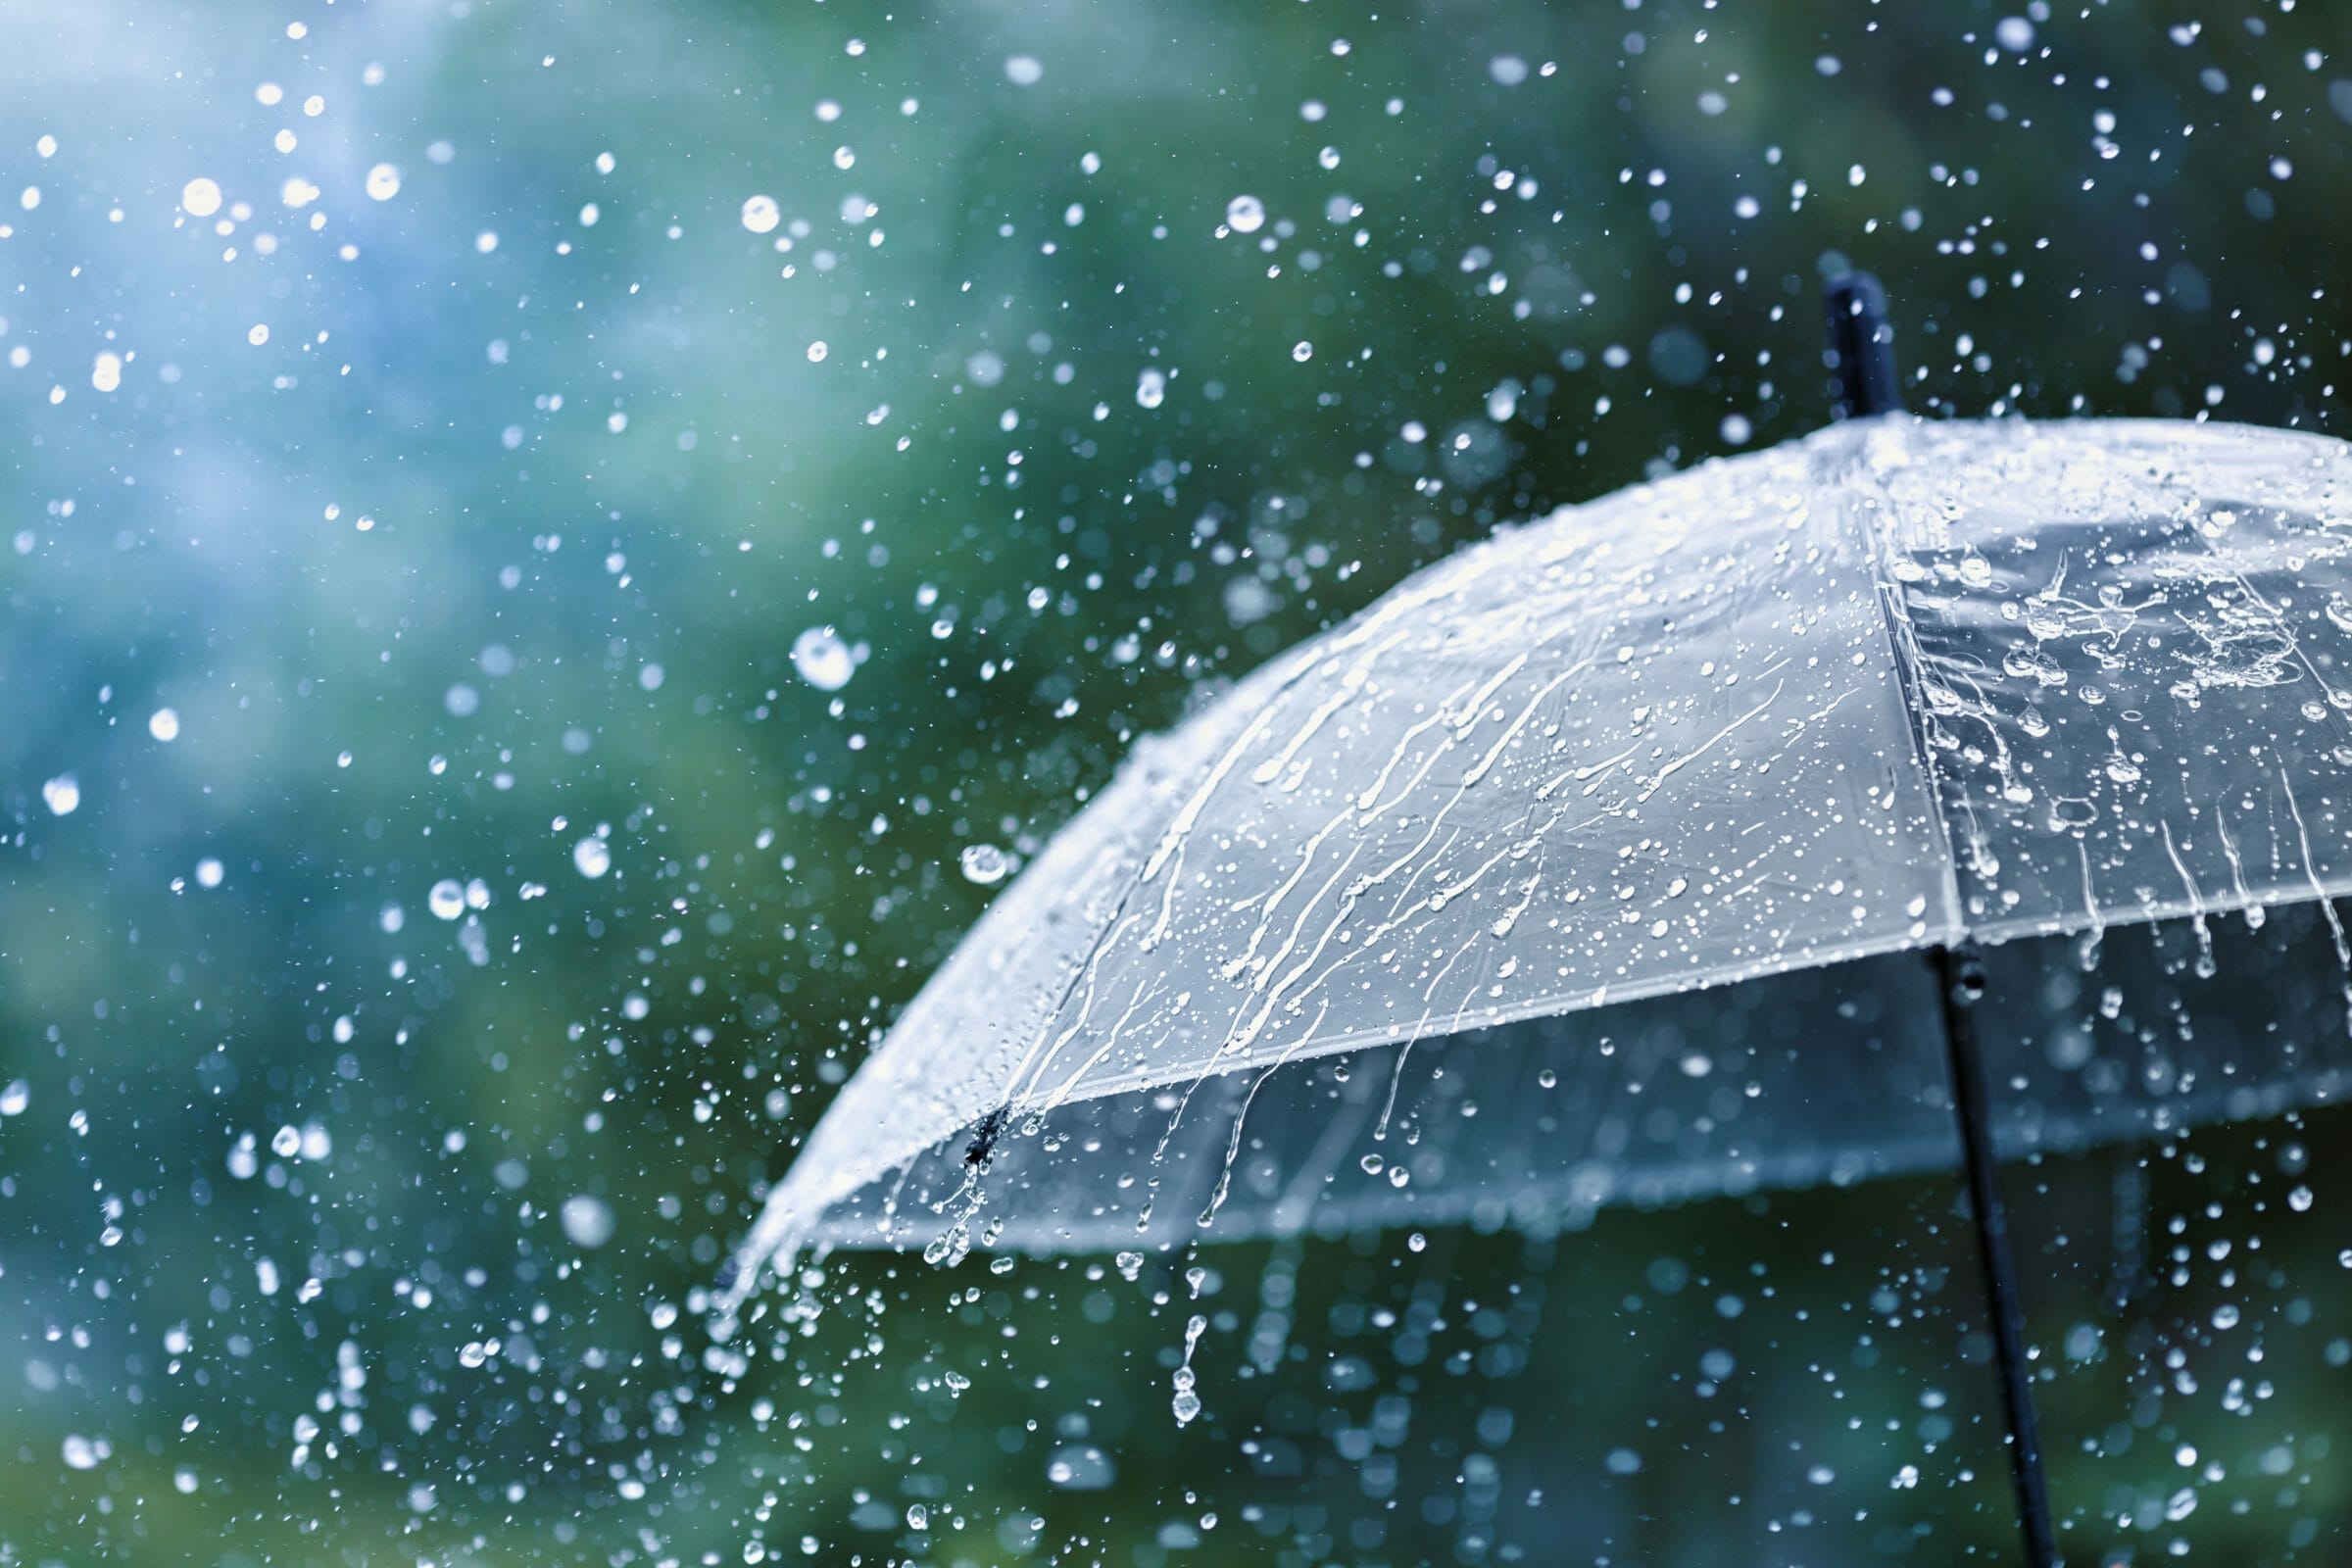 Transparent umbrella under rain against water drops splash background.